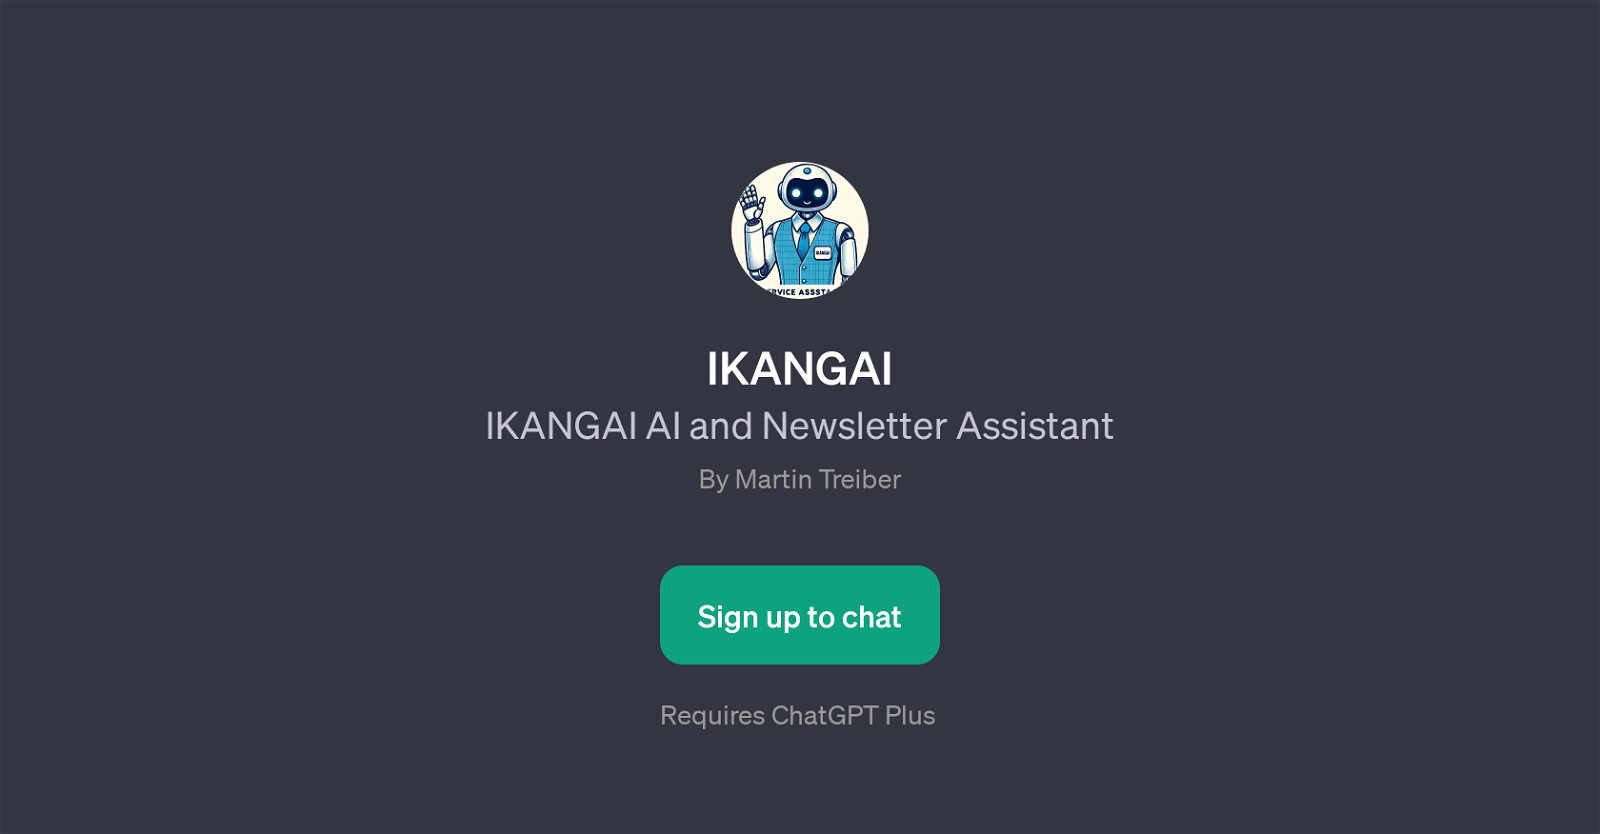 IKANGAI website